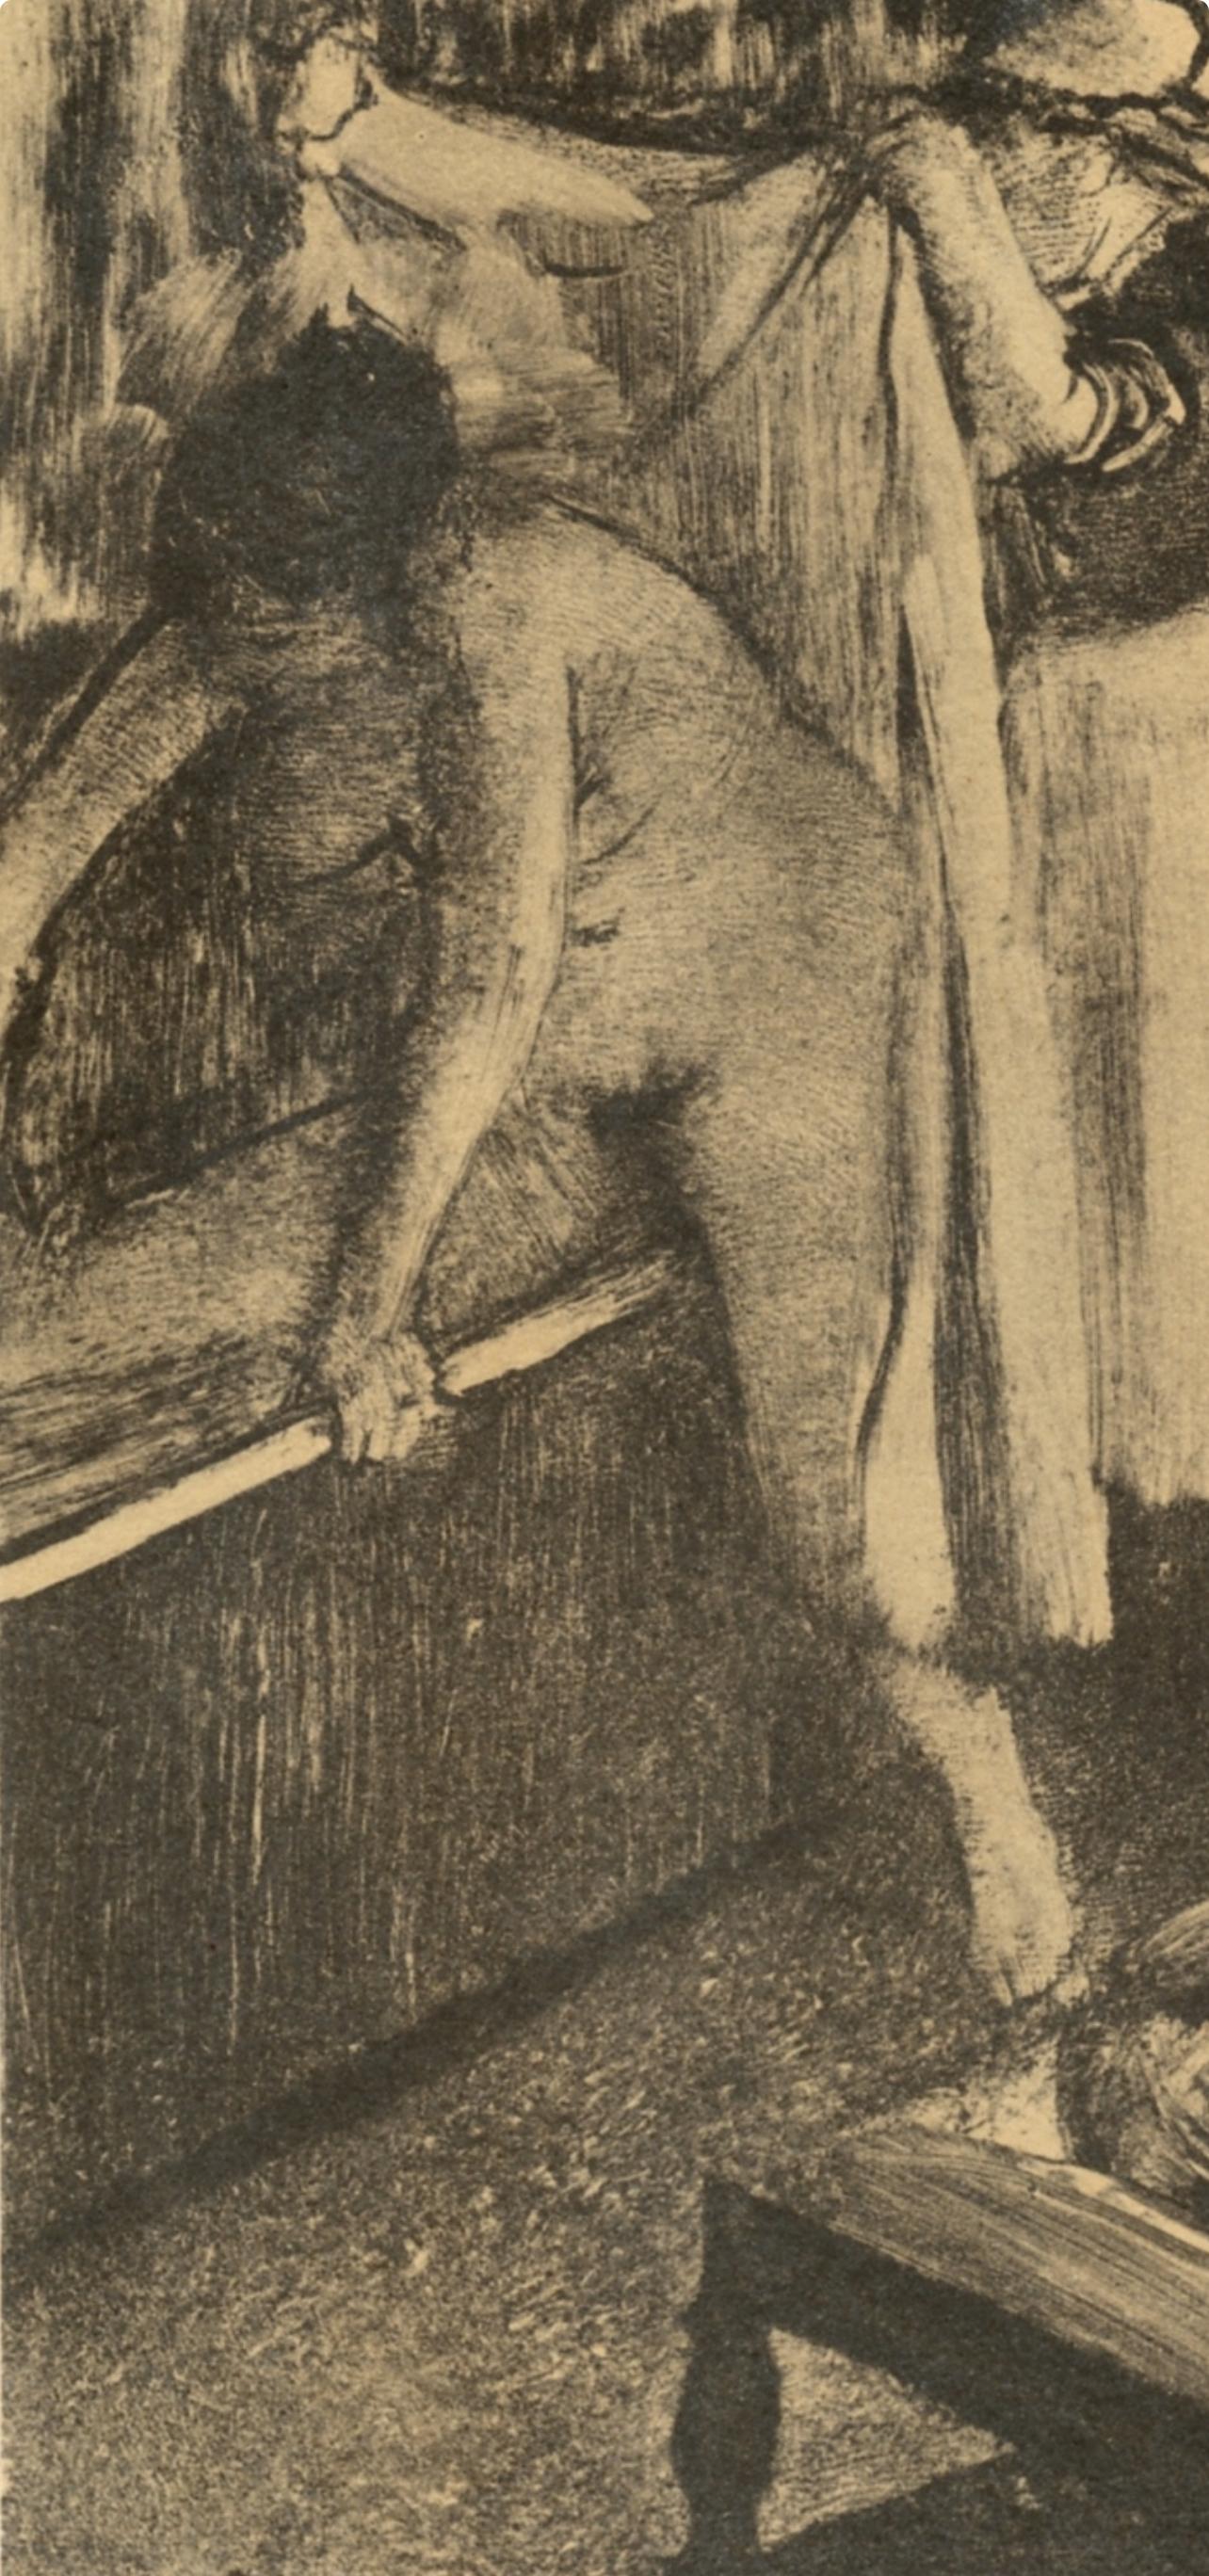 Degas, Femme sortant du bain, Les Monotypes (nach) – Print von Edgar Degas